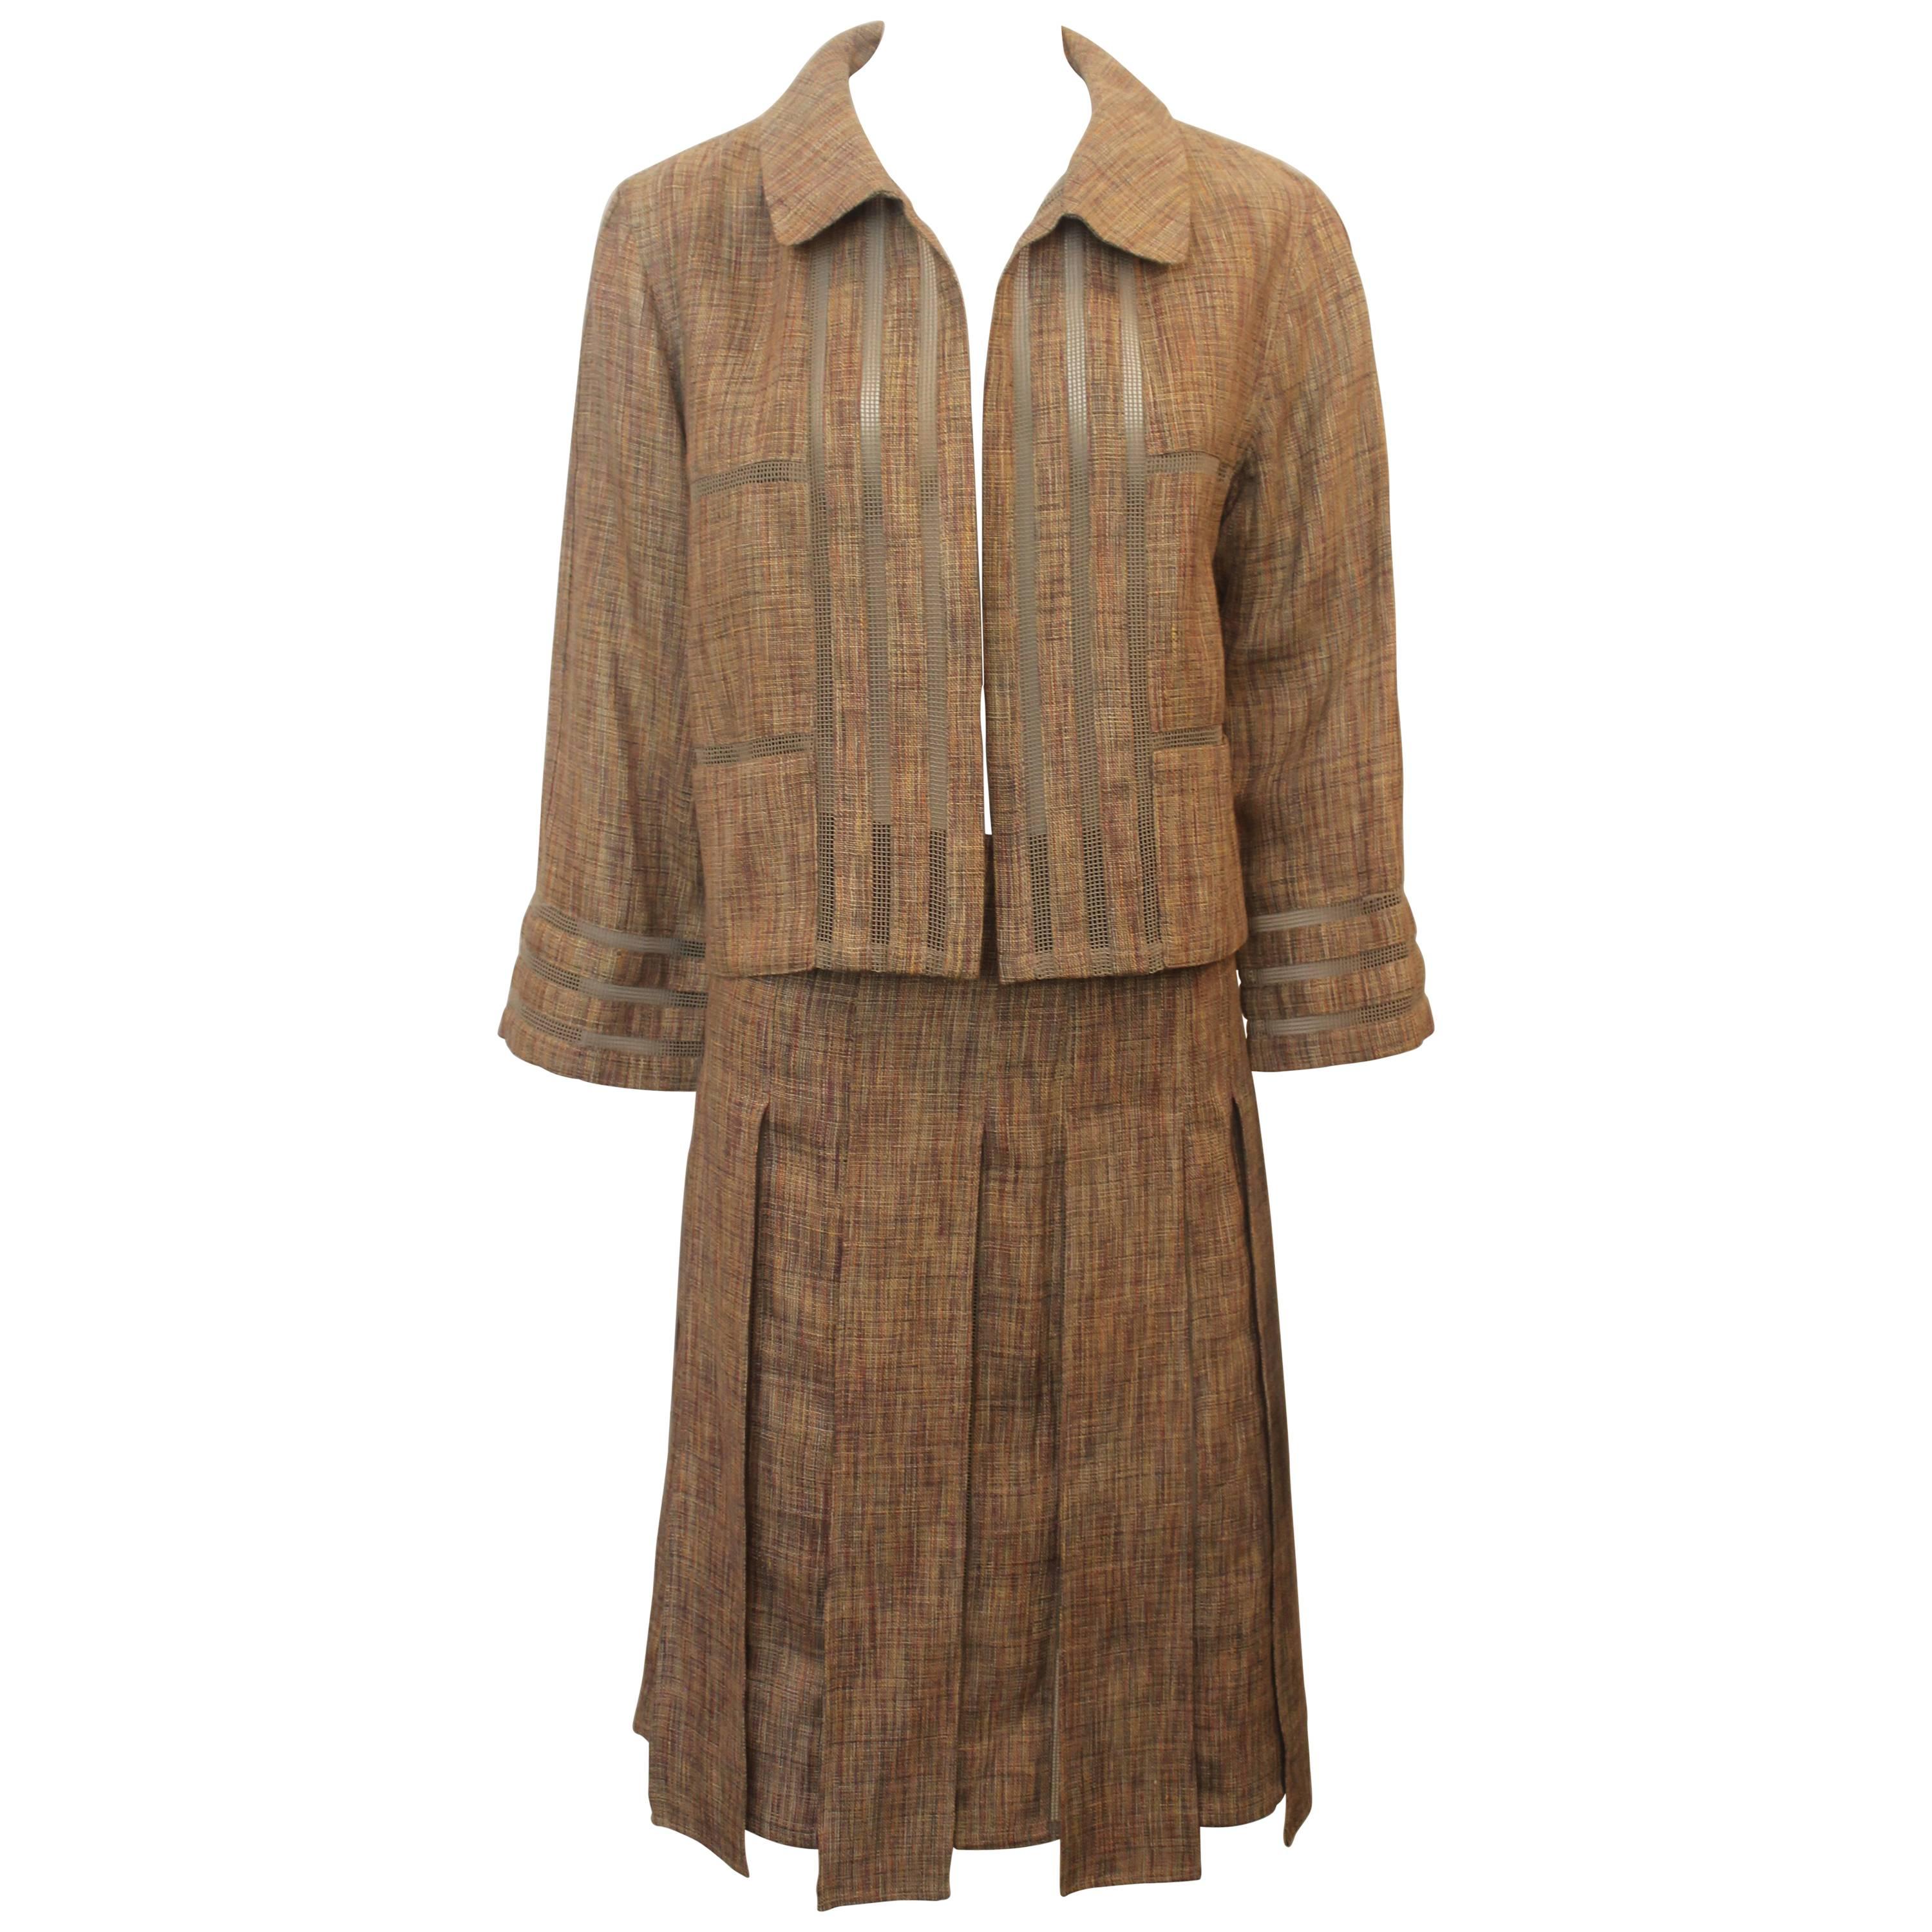 Chanel Earthtone Linen Blend Skirt Suit with Mesh Detail - 38 - 99P